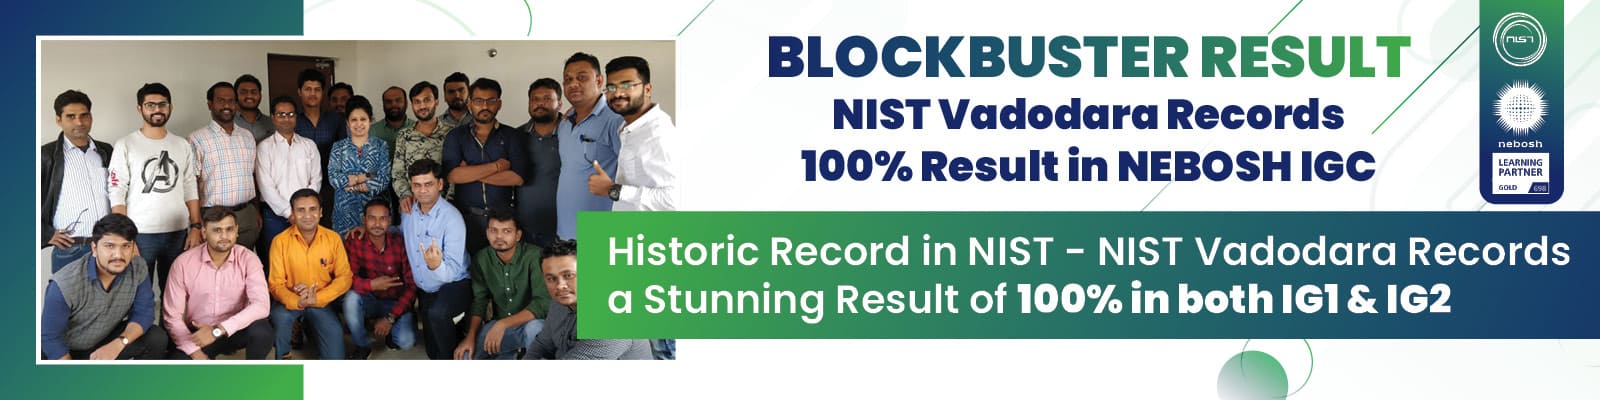 nist-vadodara-records-100-result-in-nebosh-igc